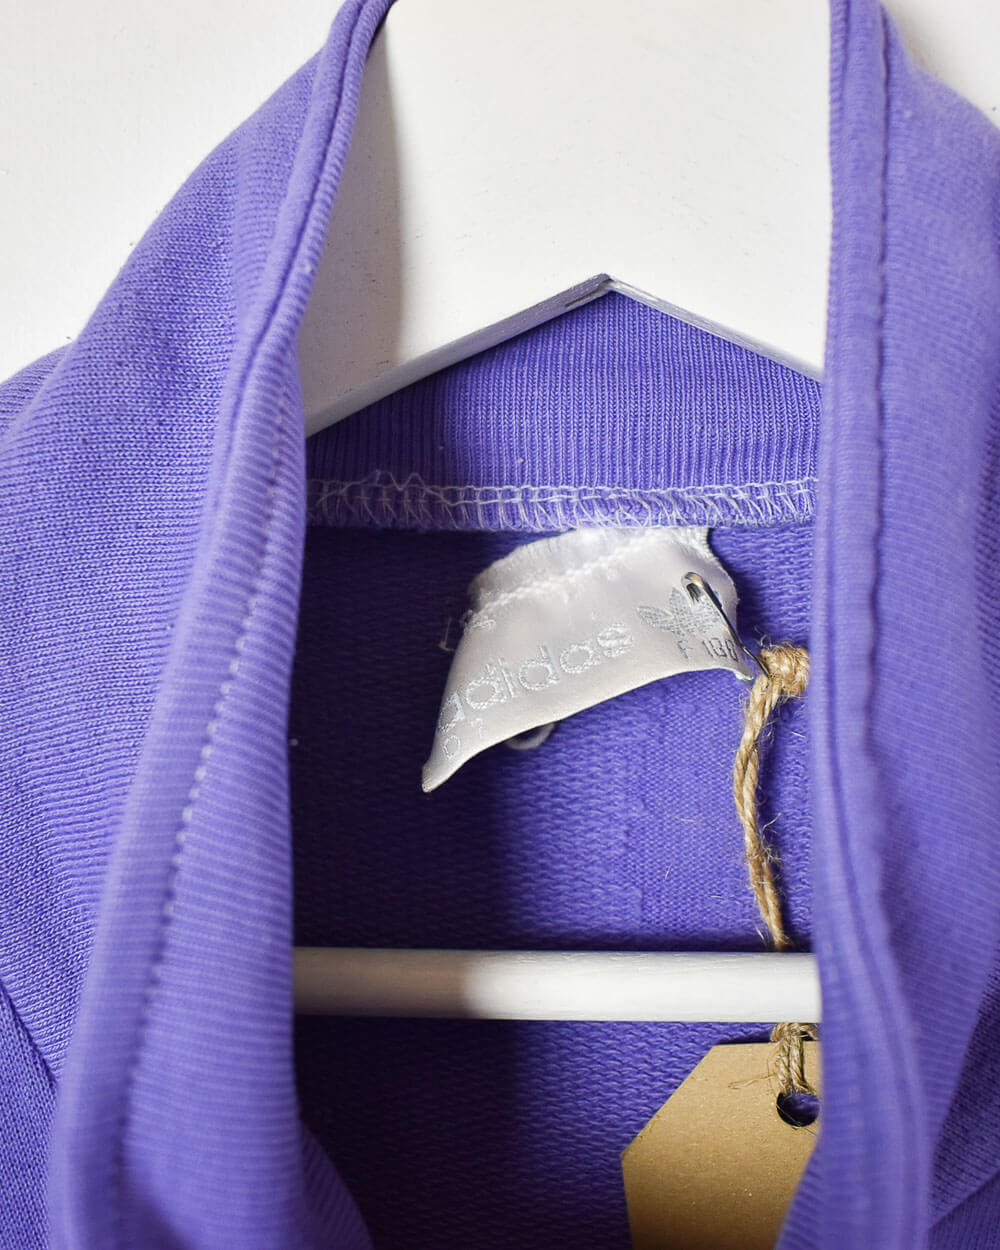 Purple Adidas 1/4 Zip Sweatshirt - Medium